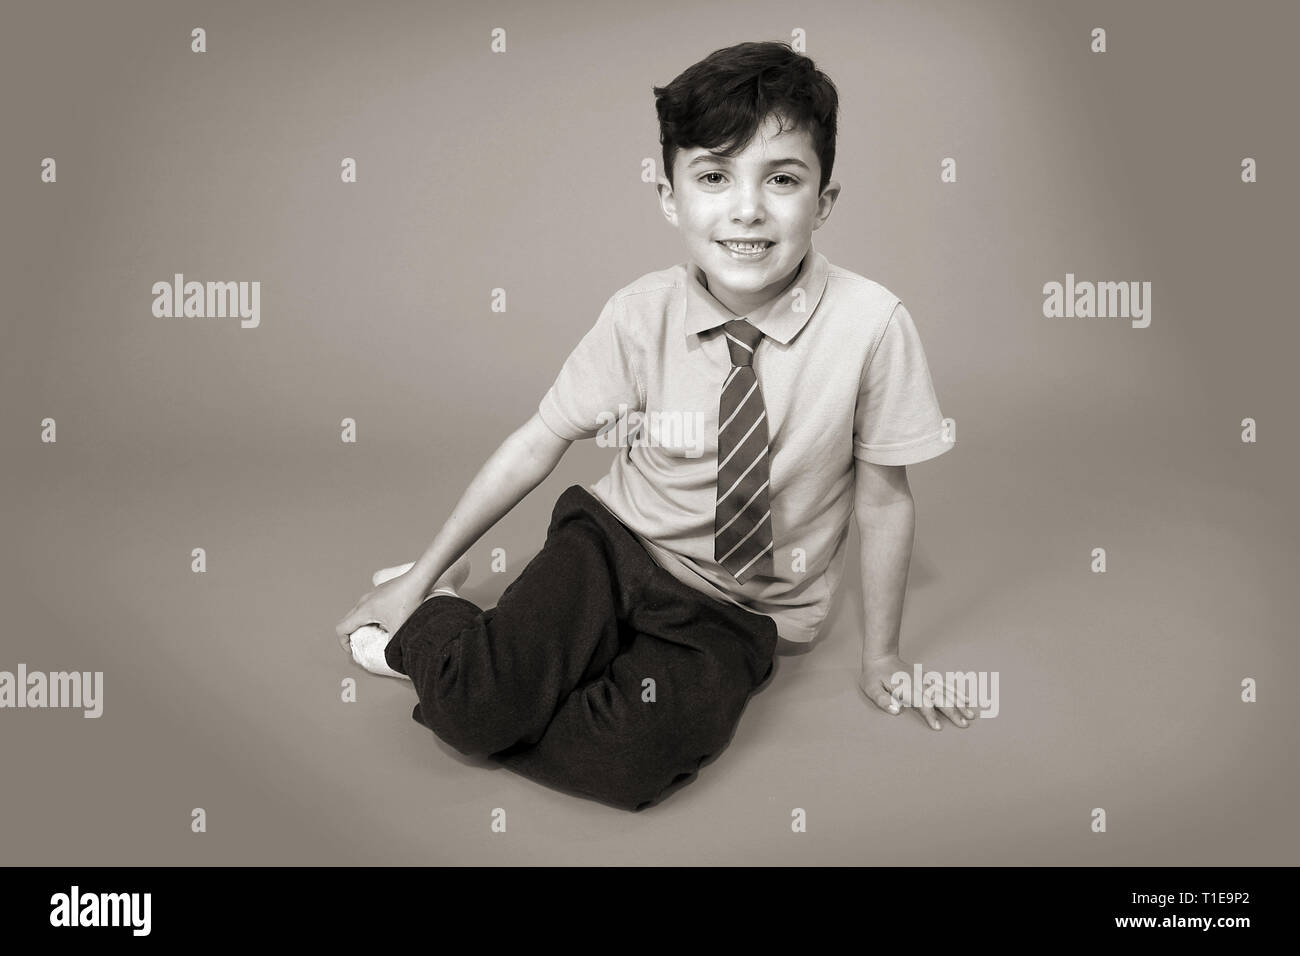 happy young boy in school uniform Stock Photo